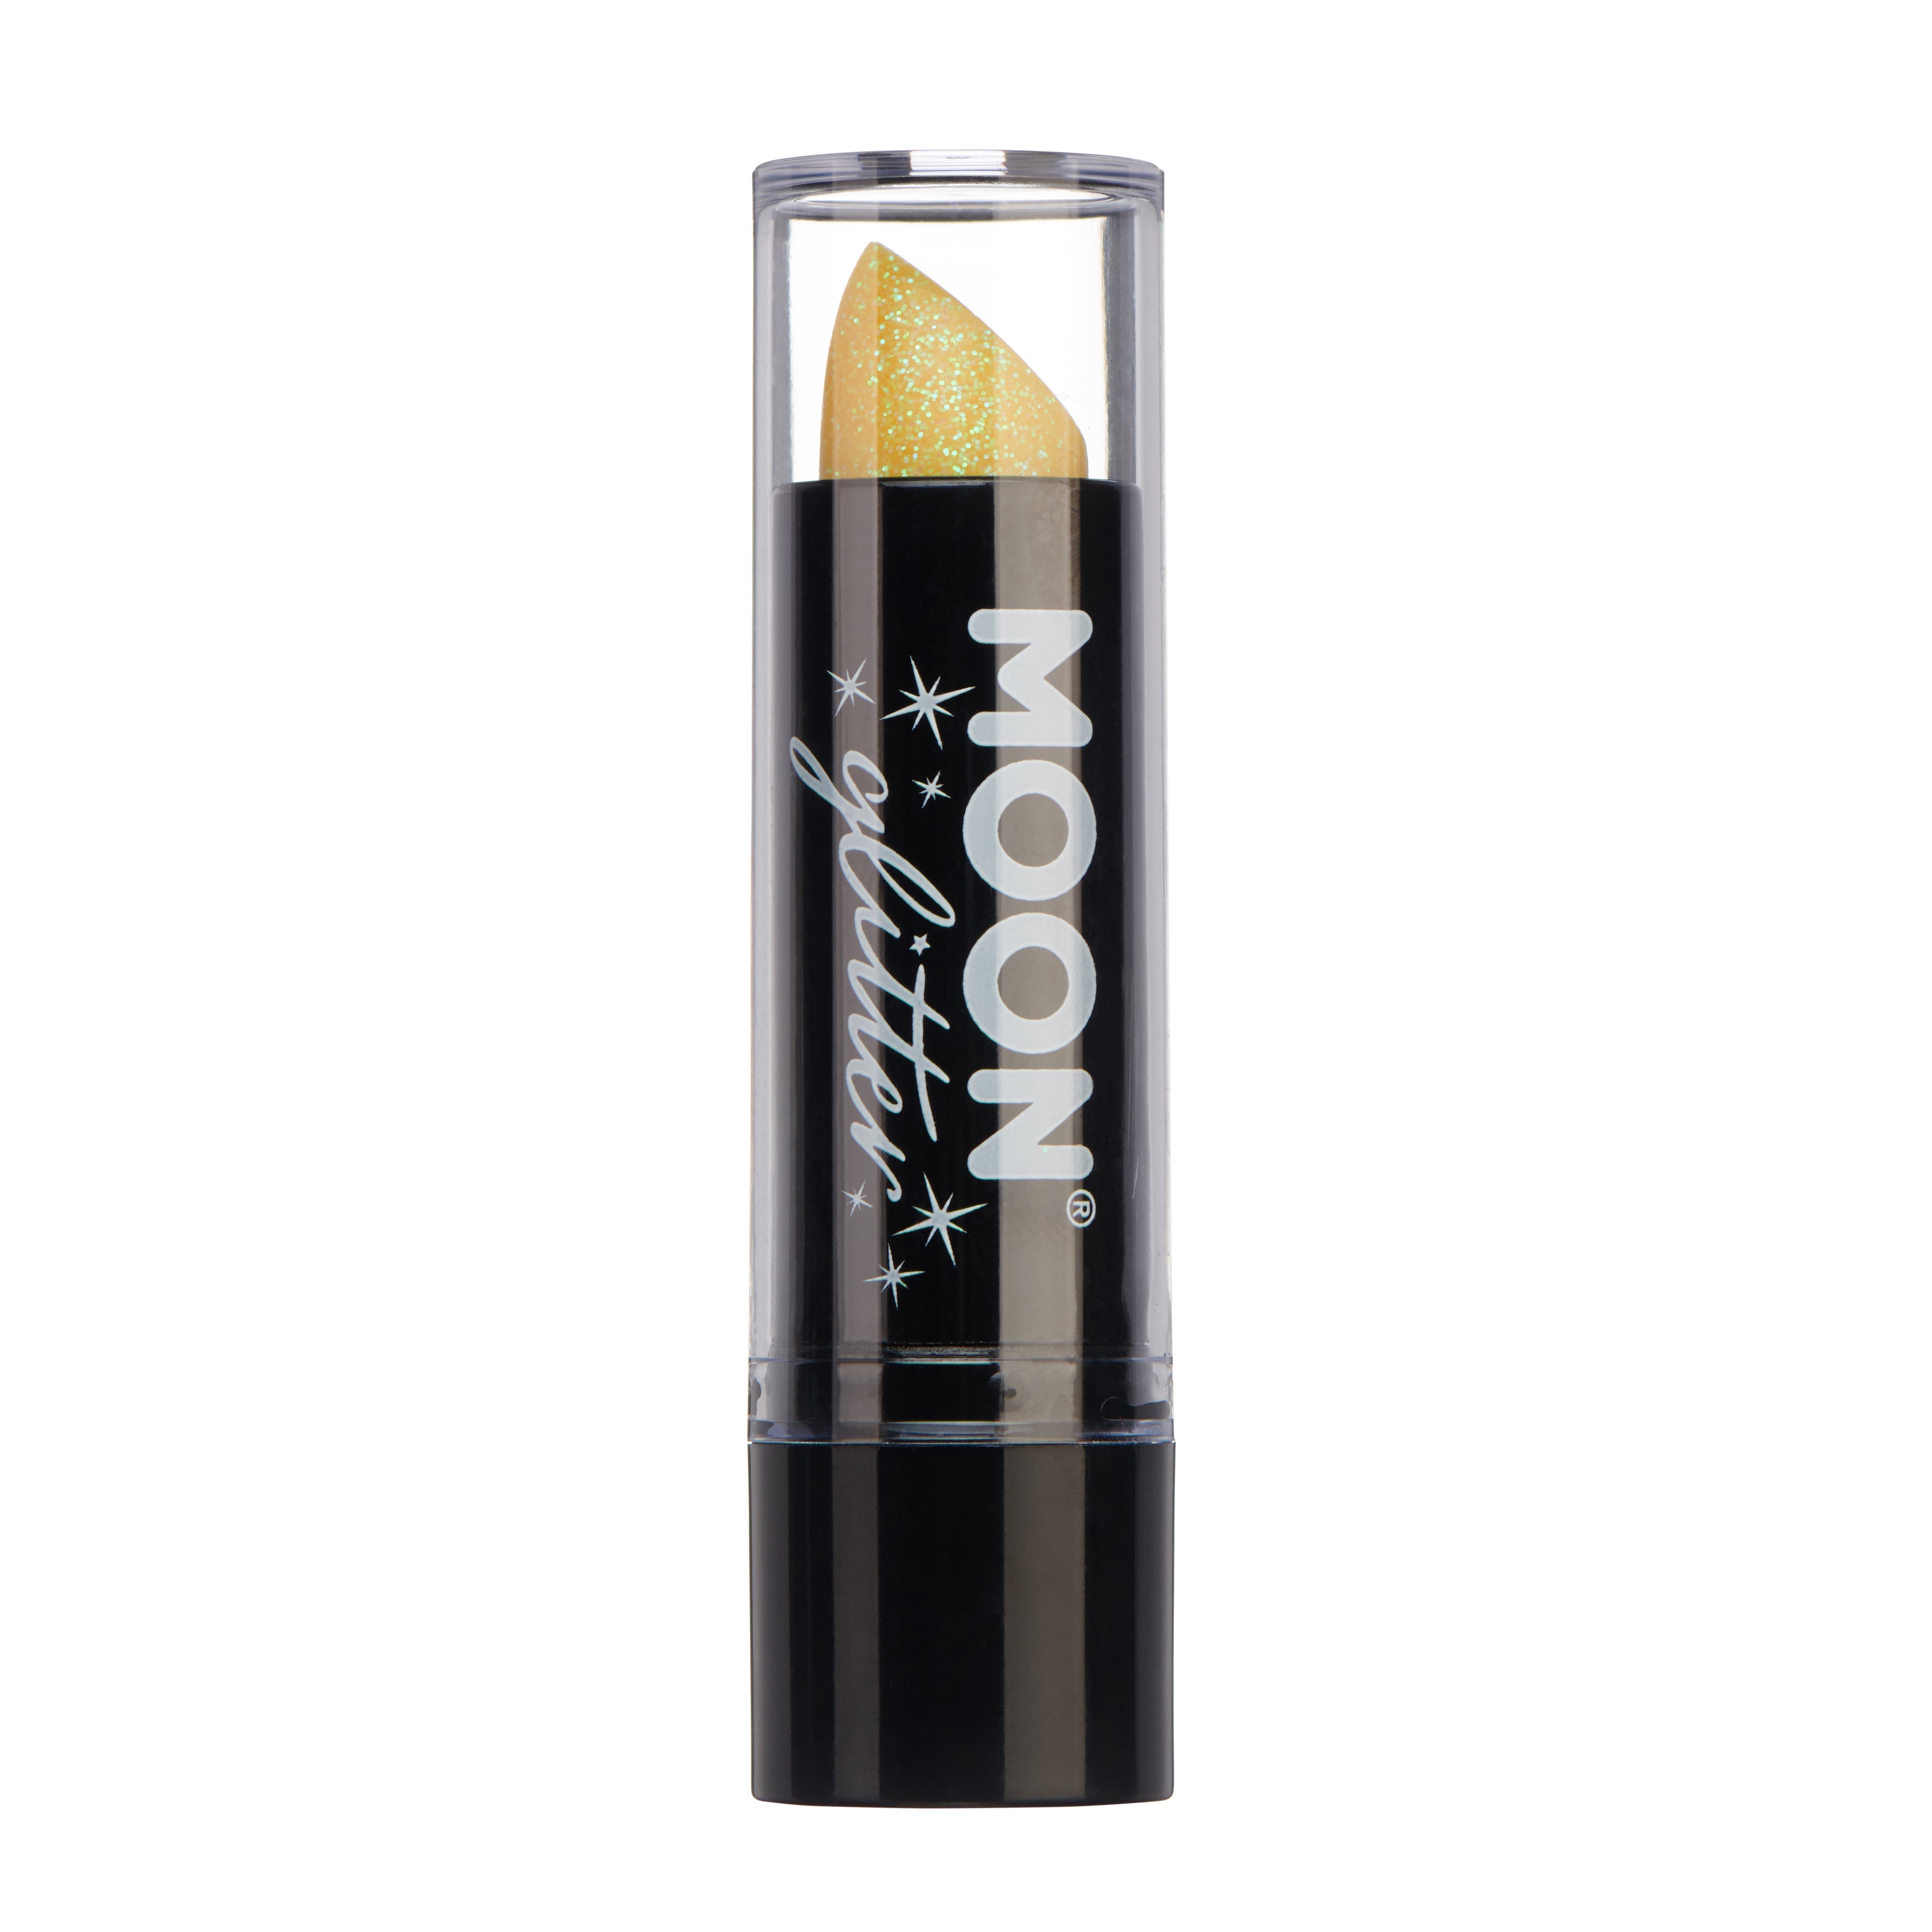 Yellow - Iridescent Glitter Lipstick, 5g. Cosmetically certified, FDA & Health Canada compliant and cruelty free.